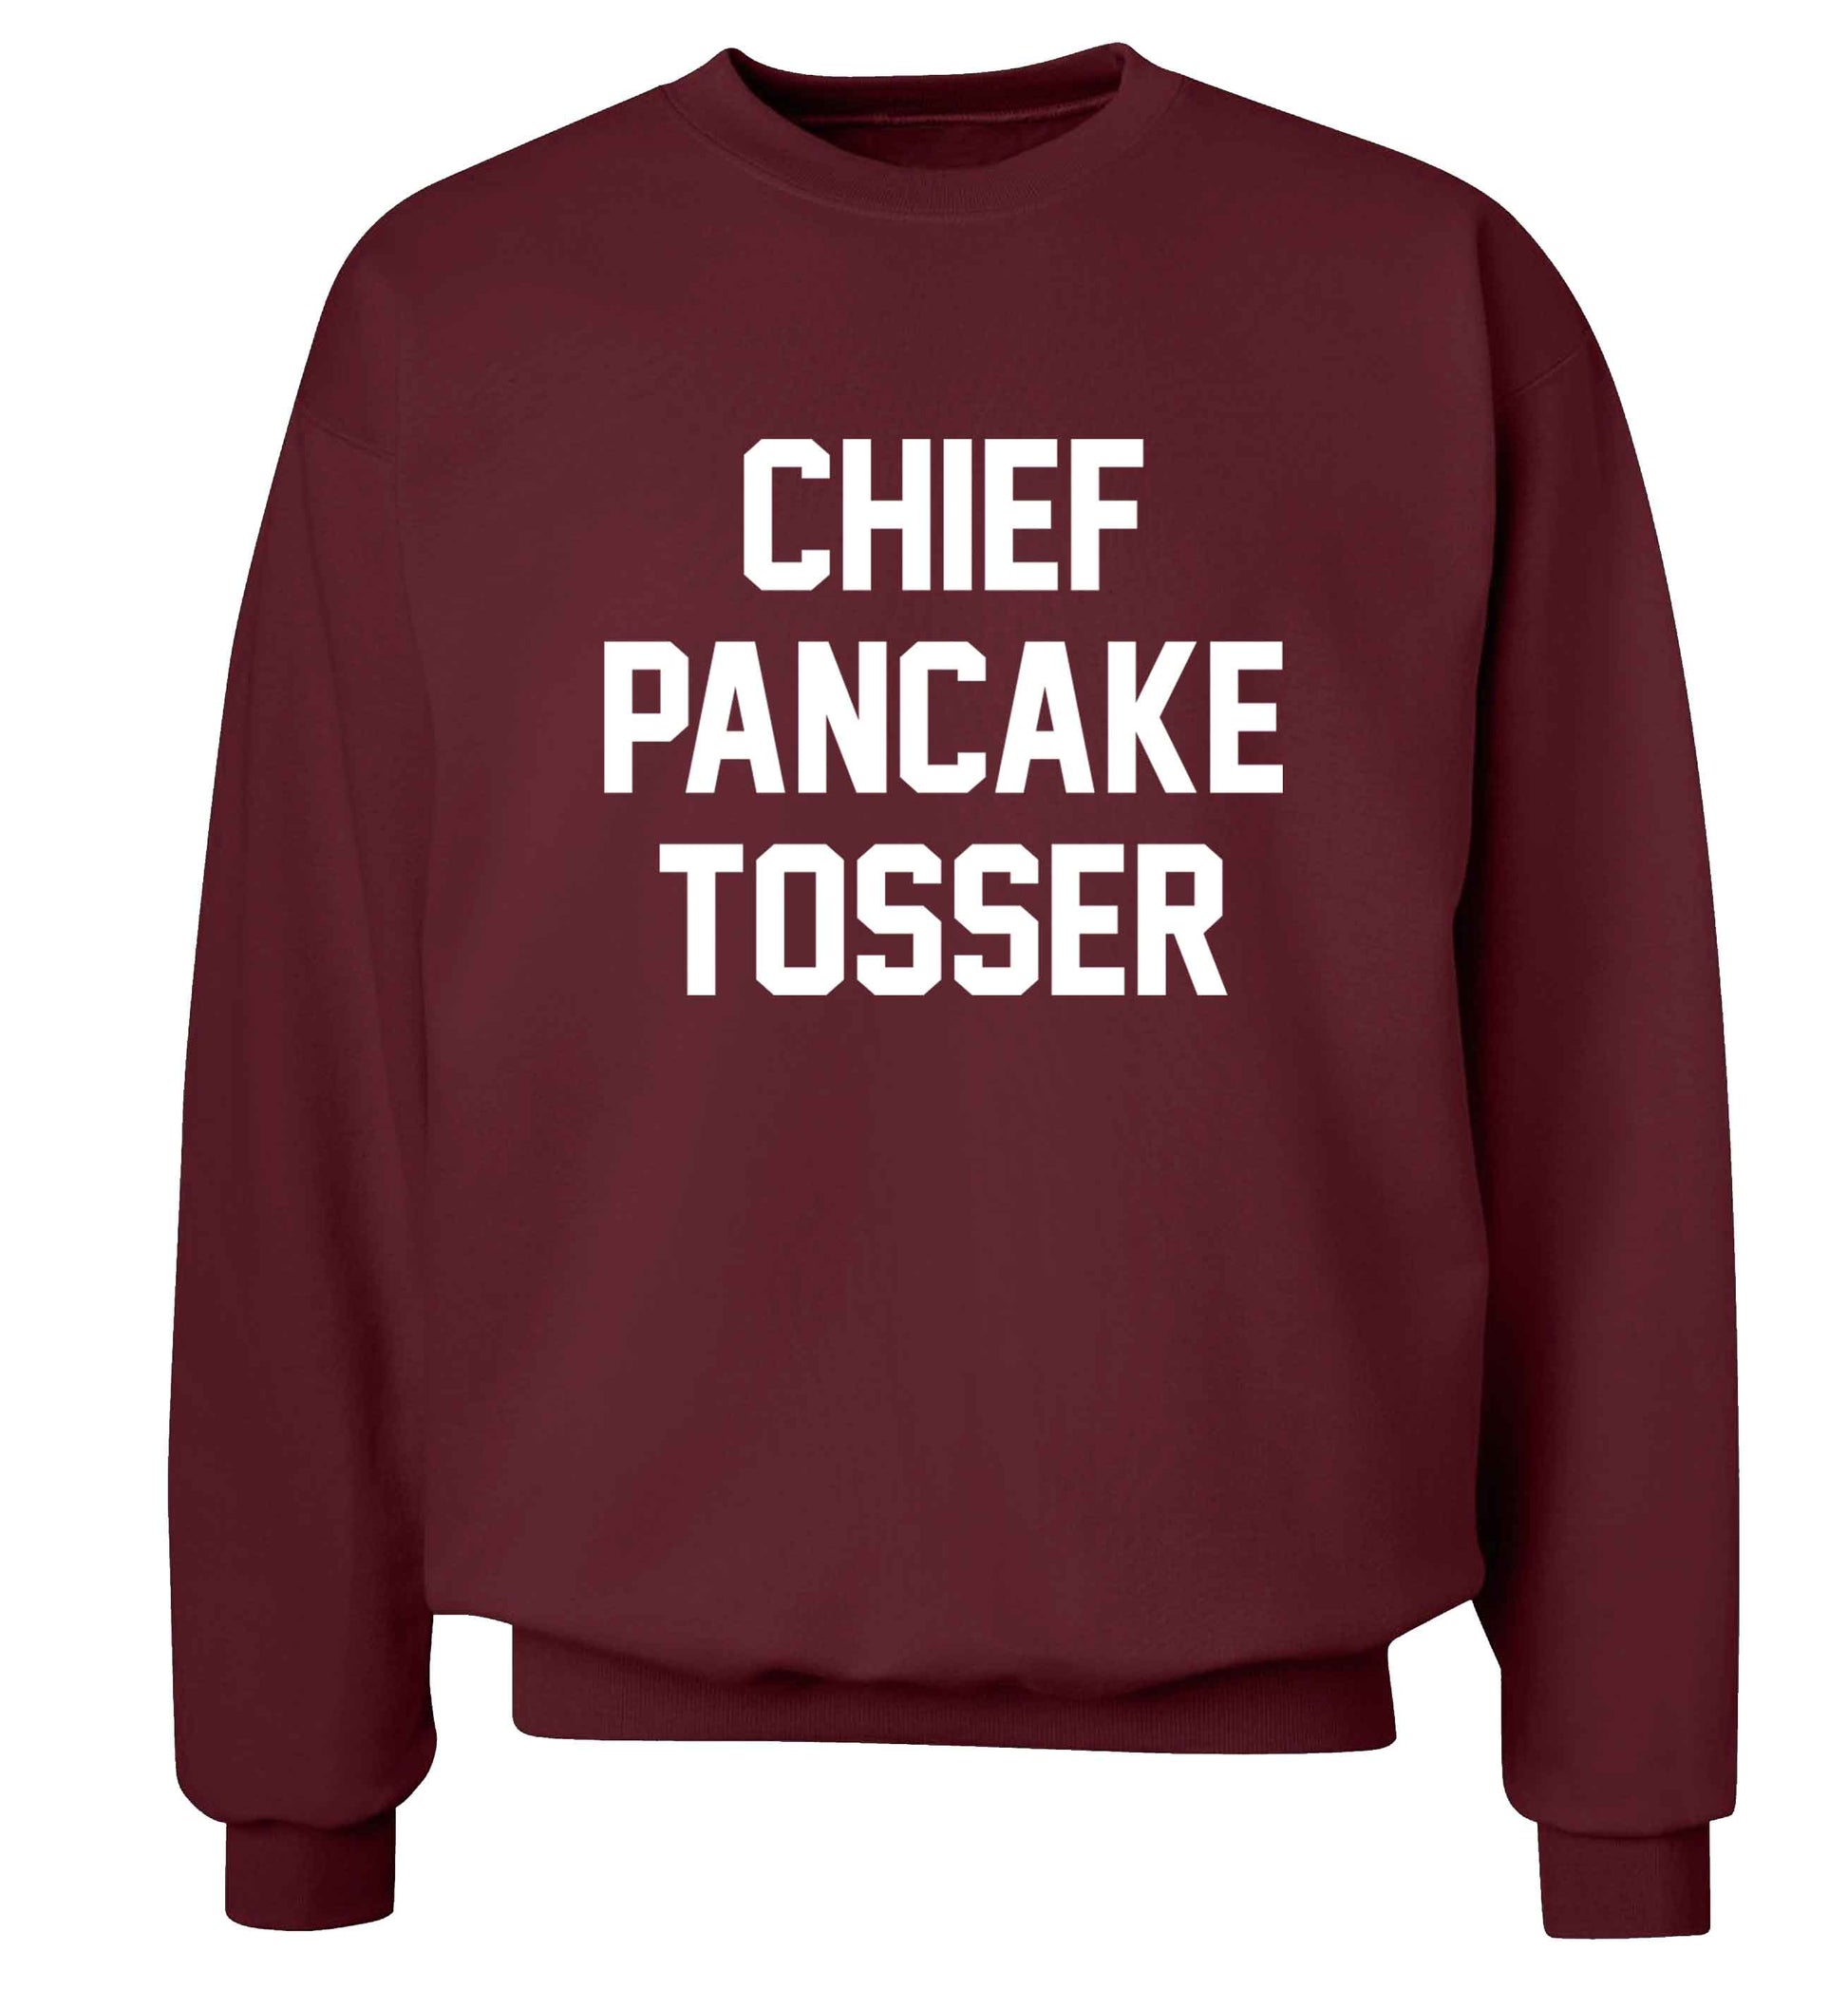 Chief pancake tosser adult's unisex maroon sweater 2XL